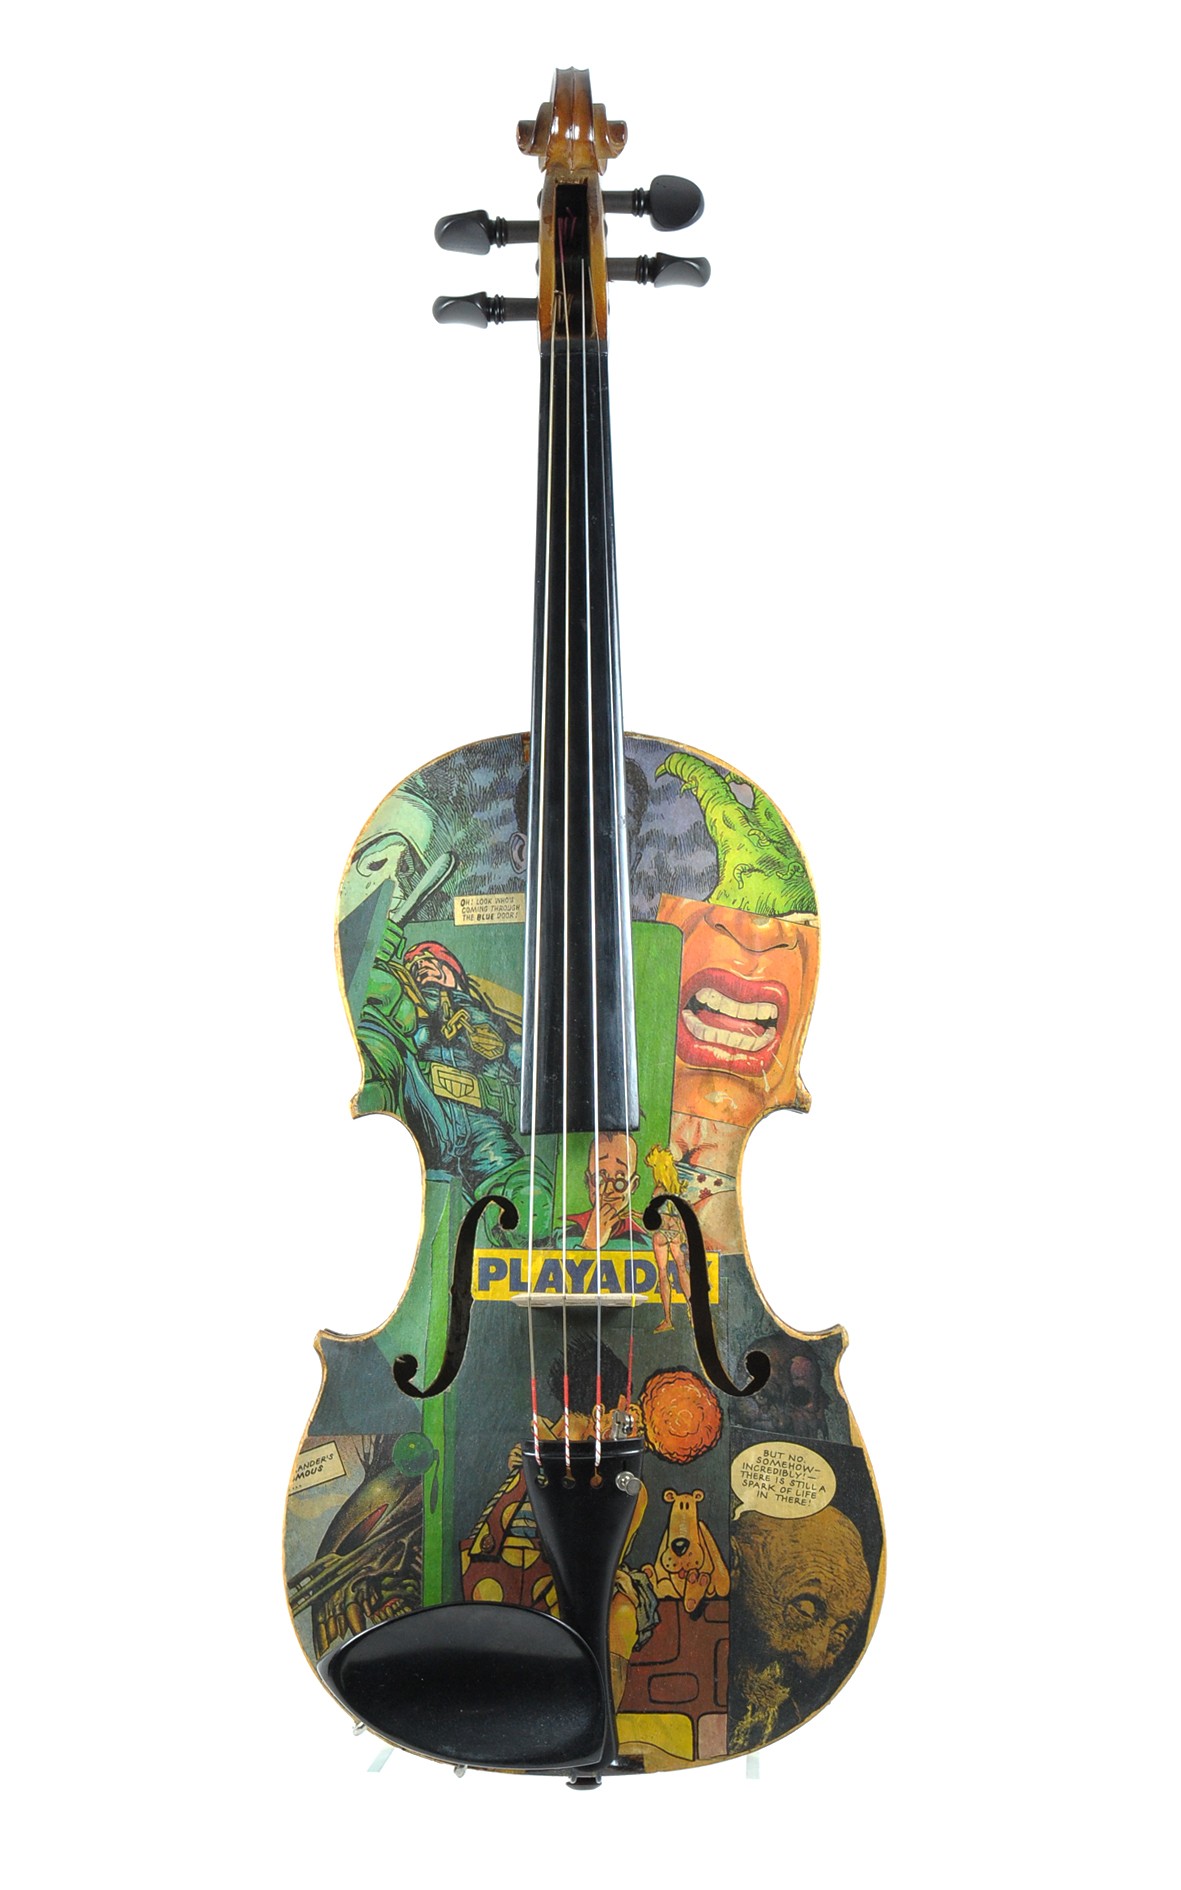 Artistic PopArt violin - top